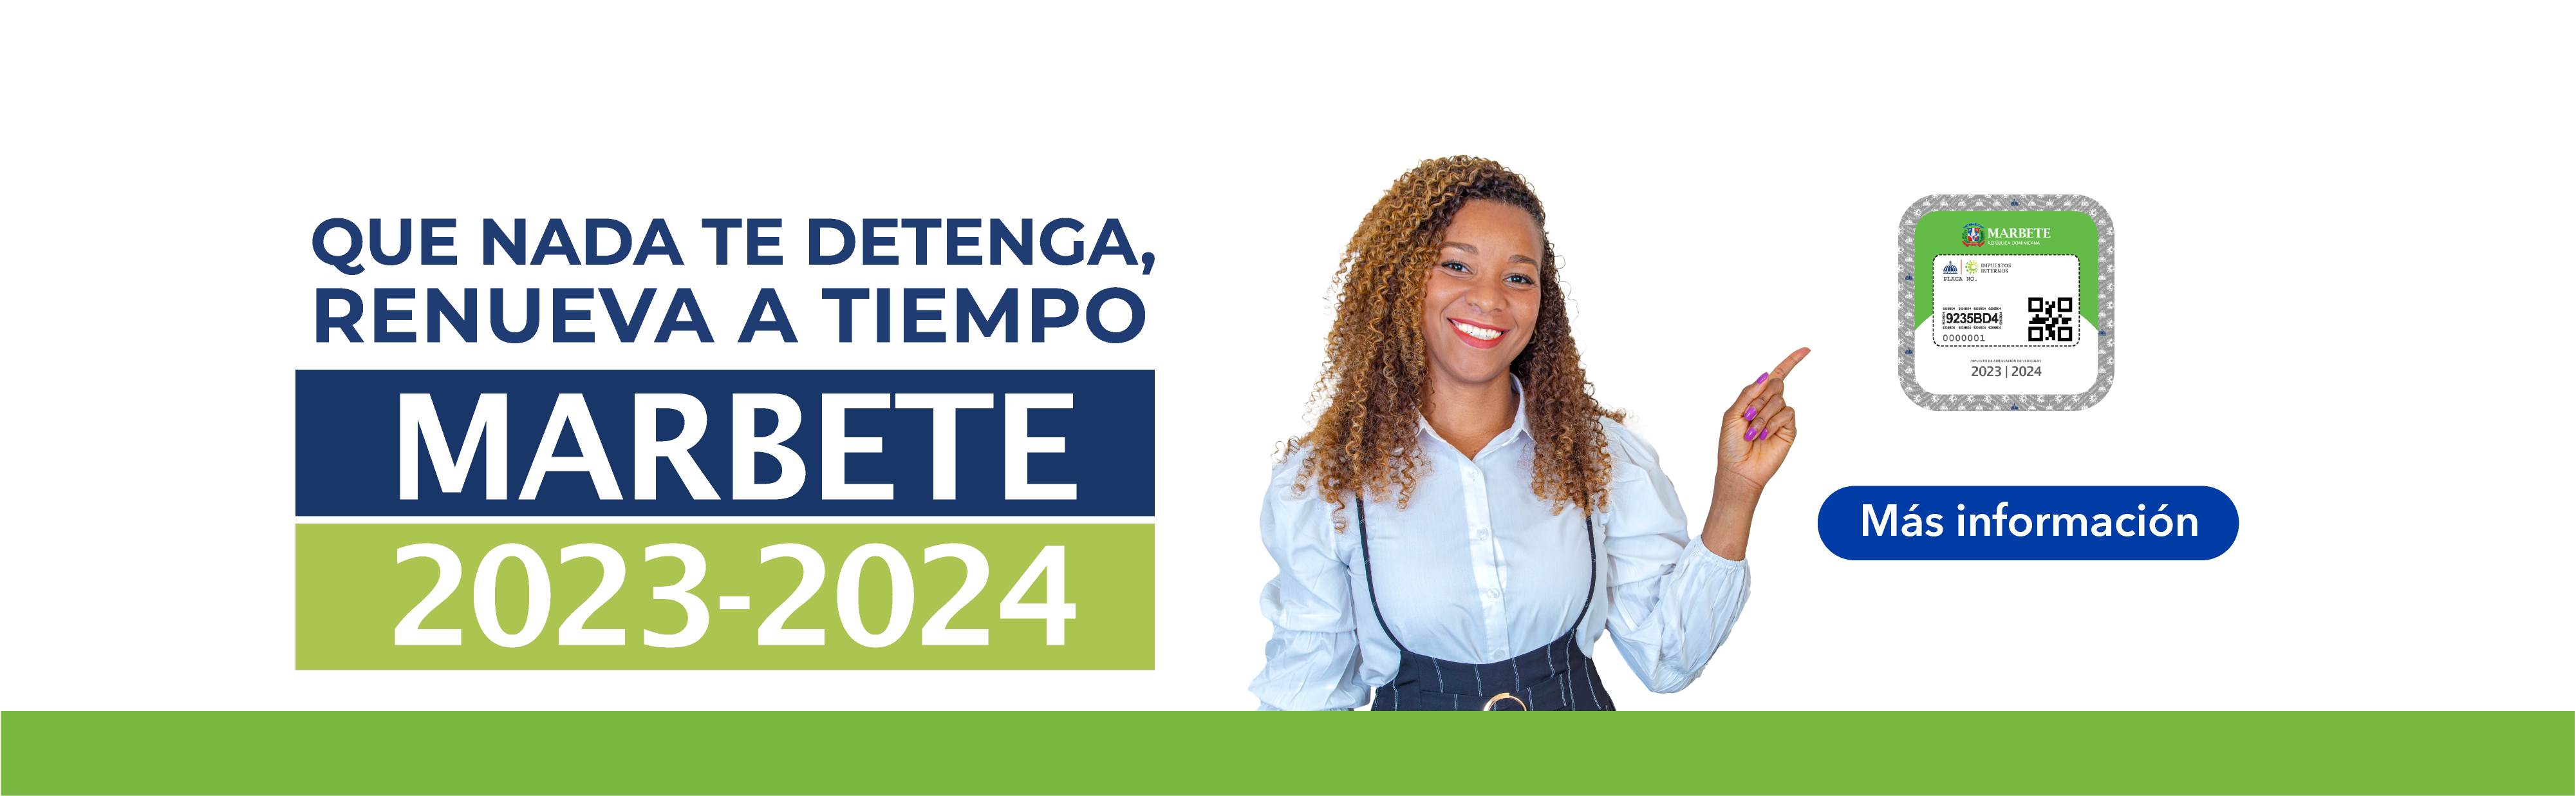 Marbete 2023-2024